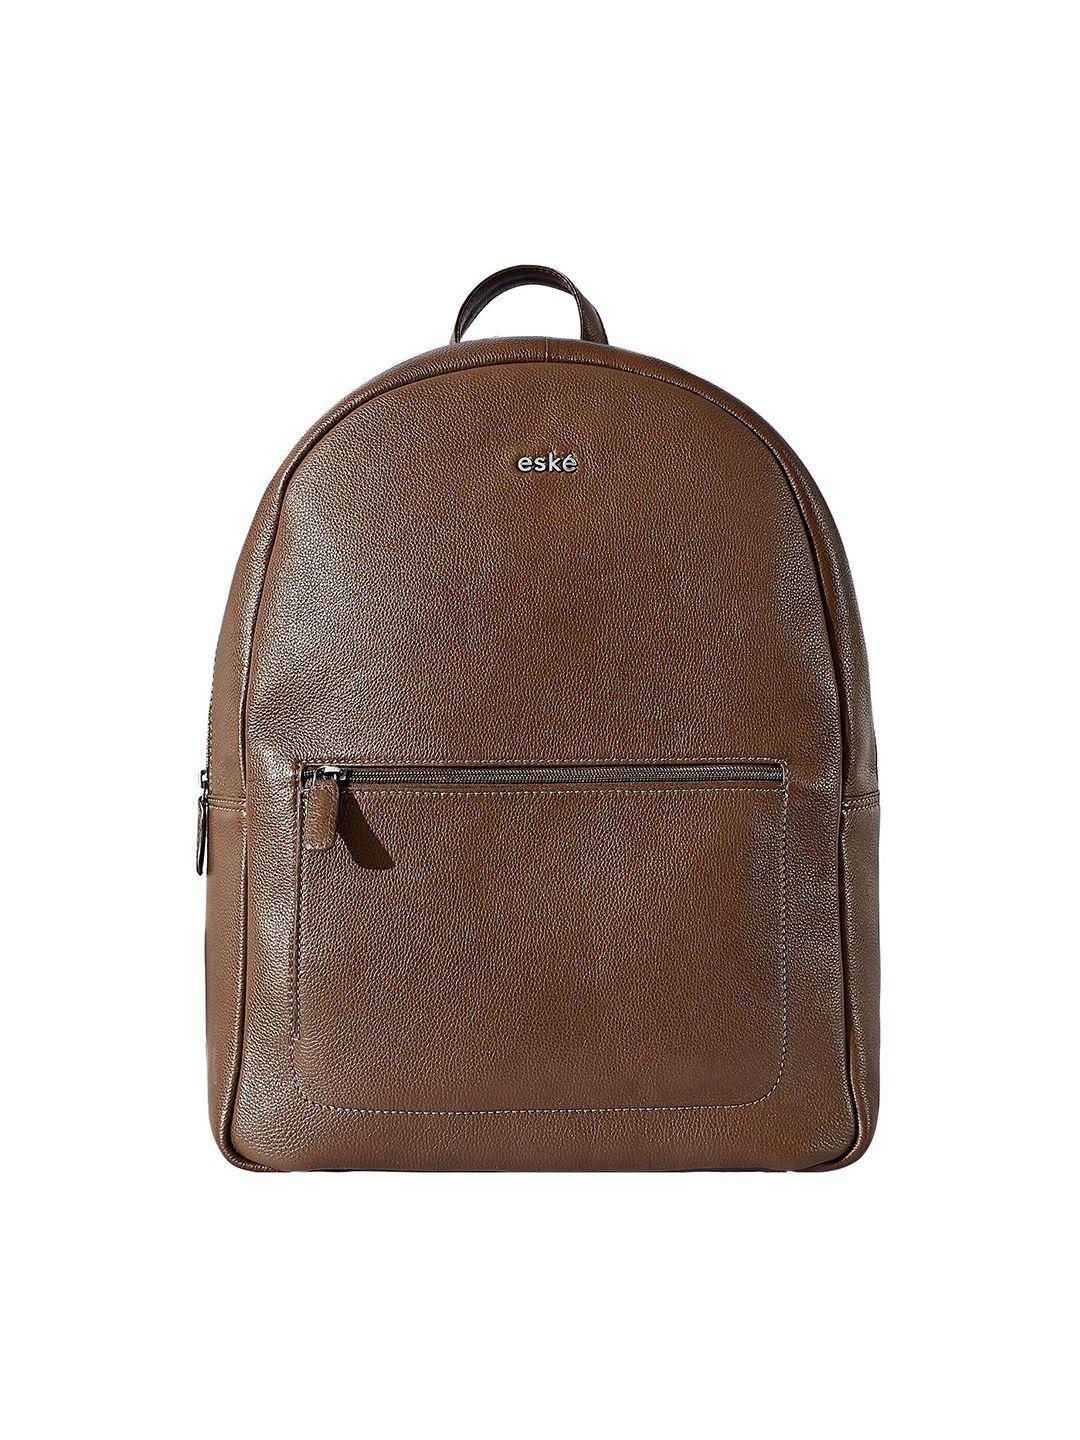 eske unisex brown & black backpack